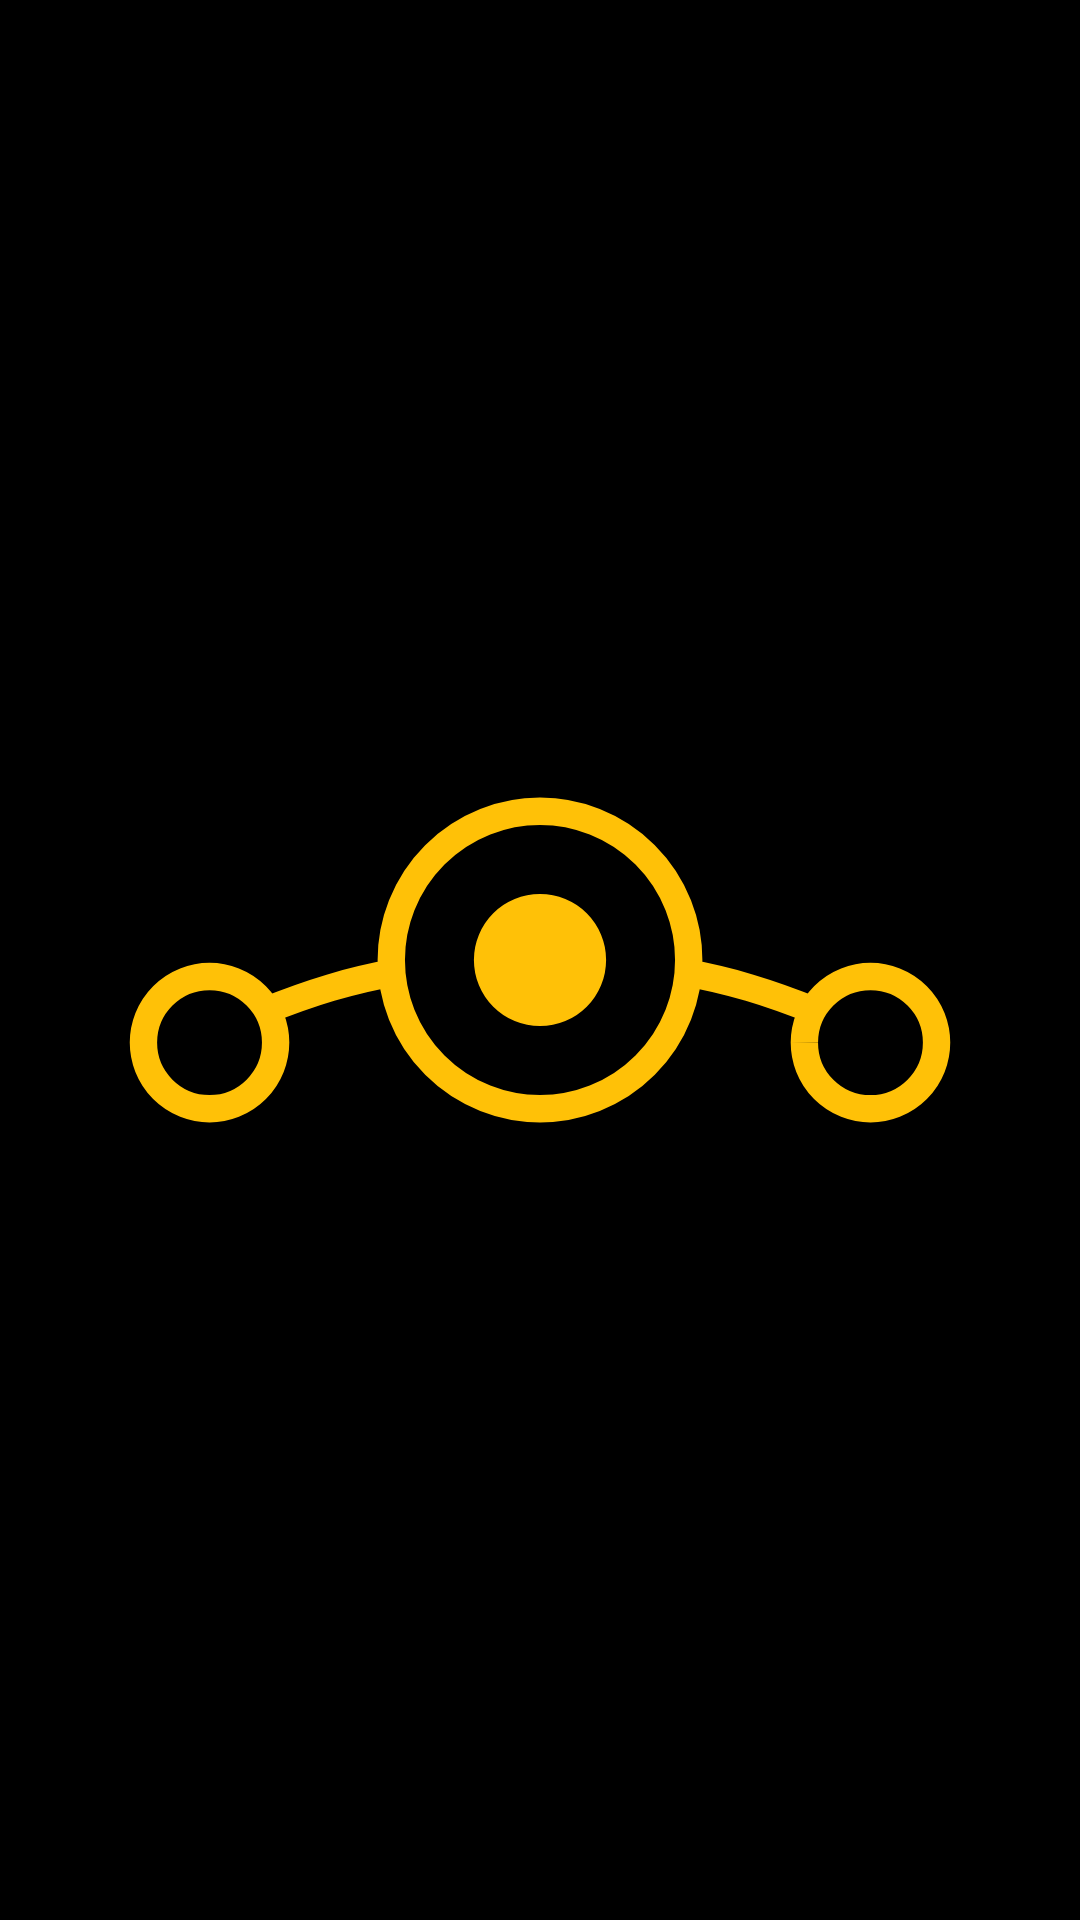 General 1080x1920 black Lineage OS Android (operating system) symbols logo minimalism yellow digital art